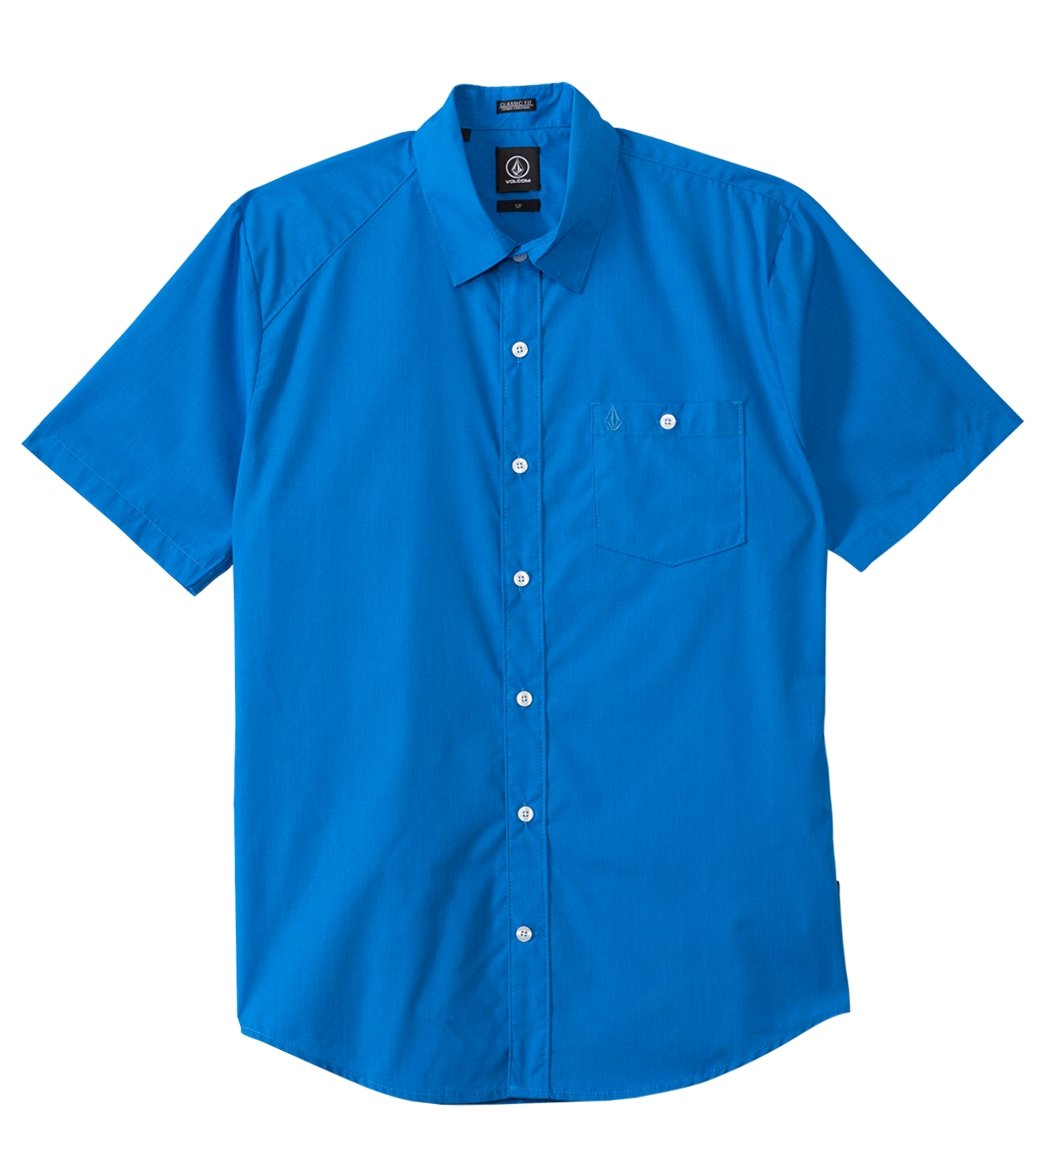 Volcom Men's Everett Solid Short Sleeve Shirt - Bold Blue Small Cotton/Polyester - Swimoutlet.com